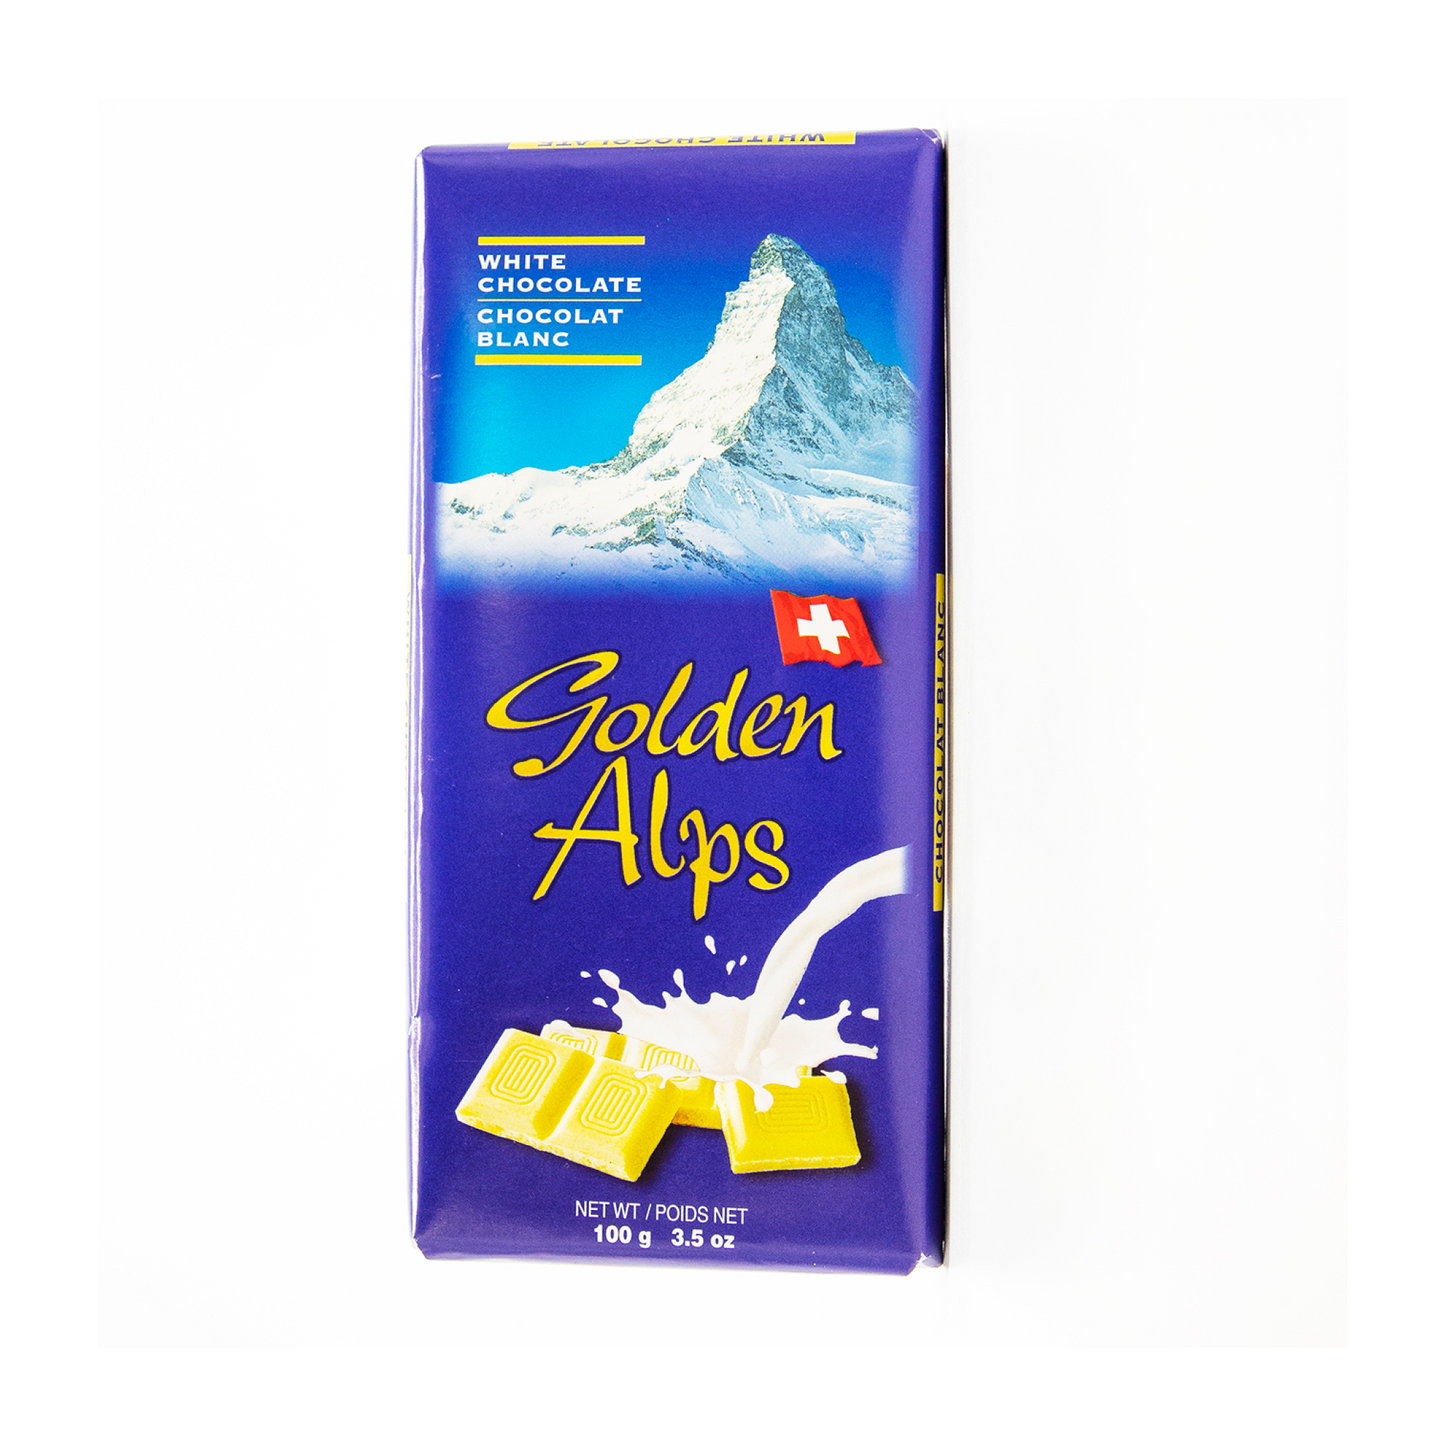 Golden Alps White Chocolate 100g